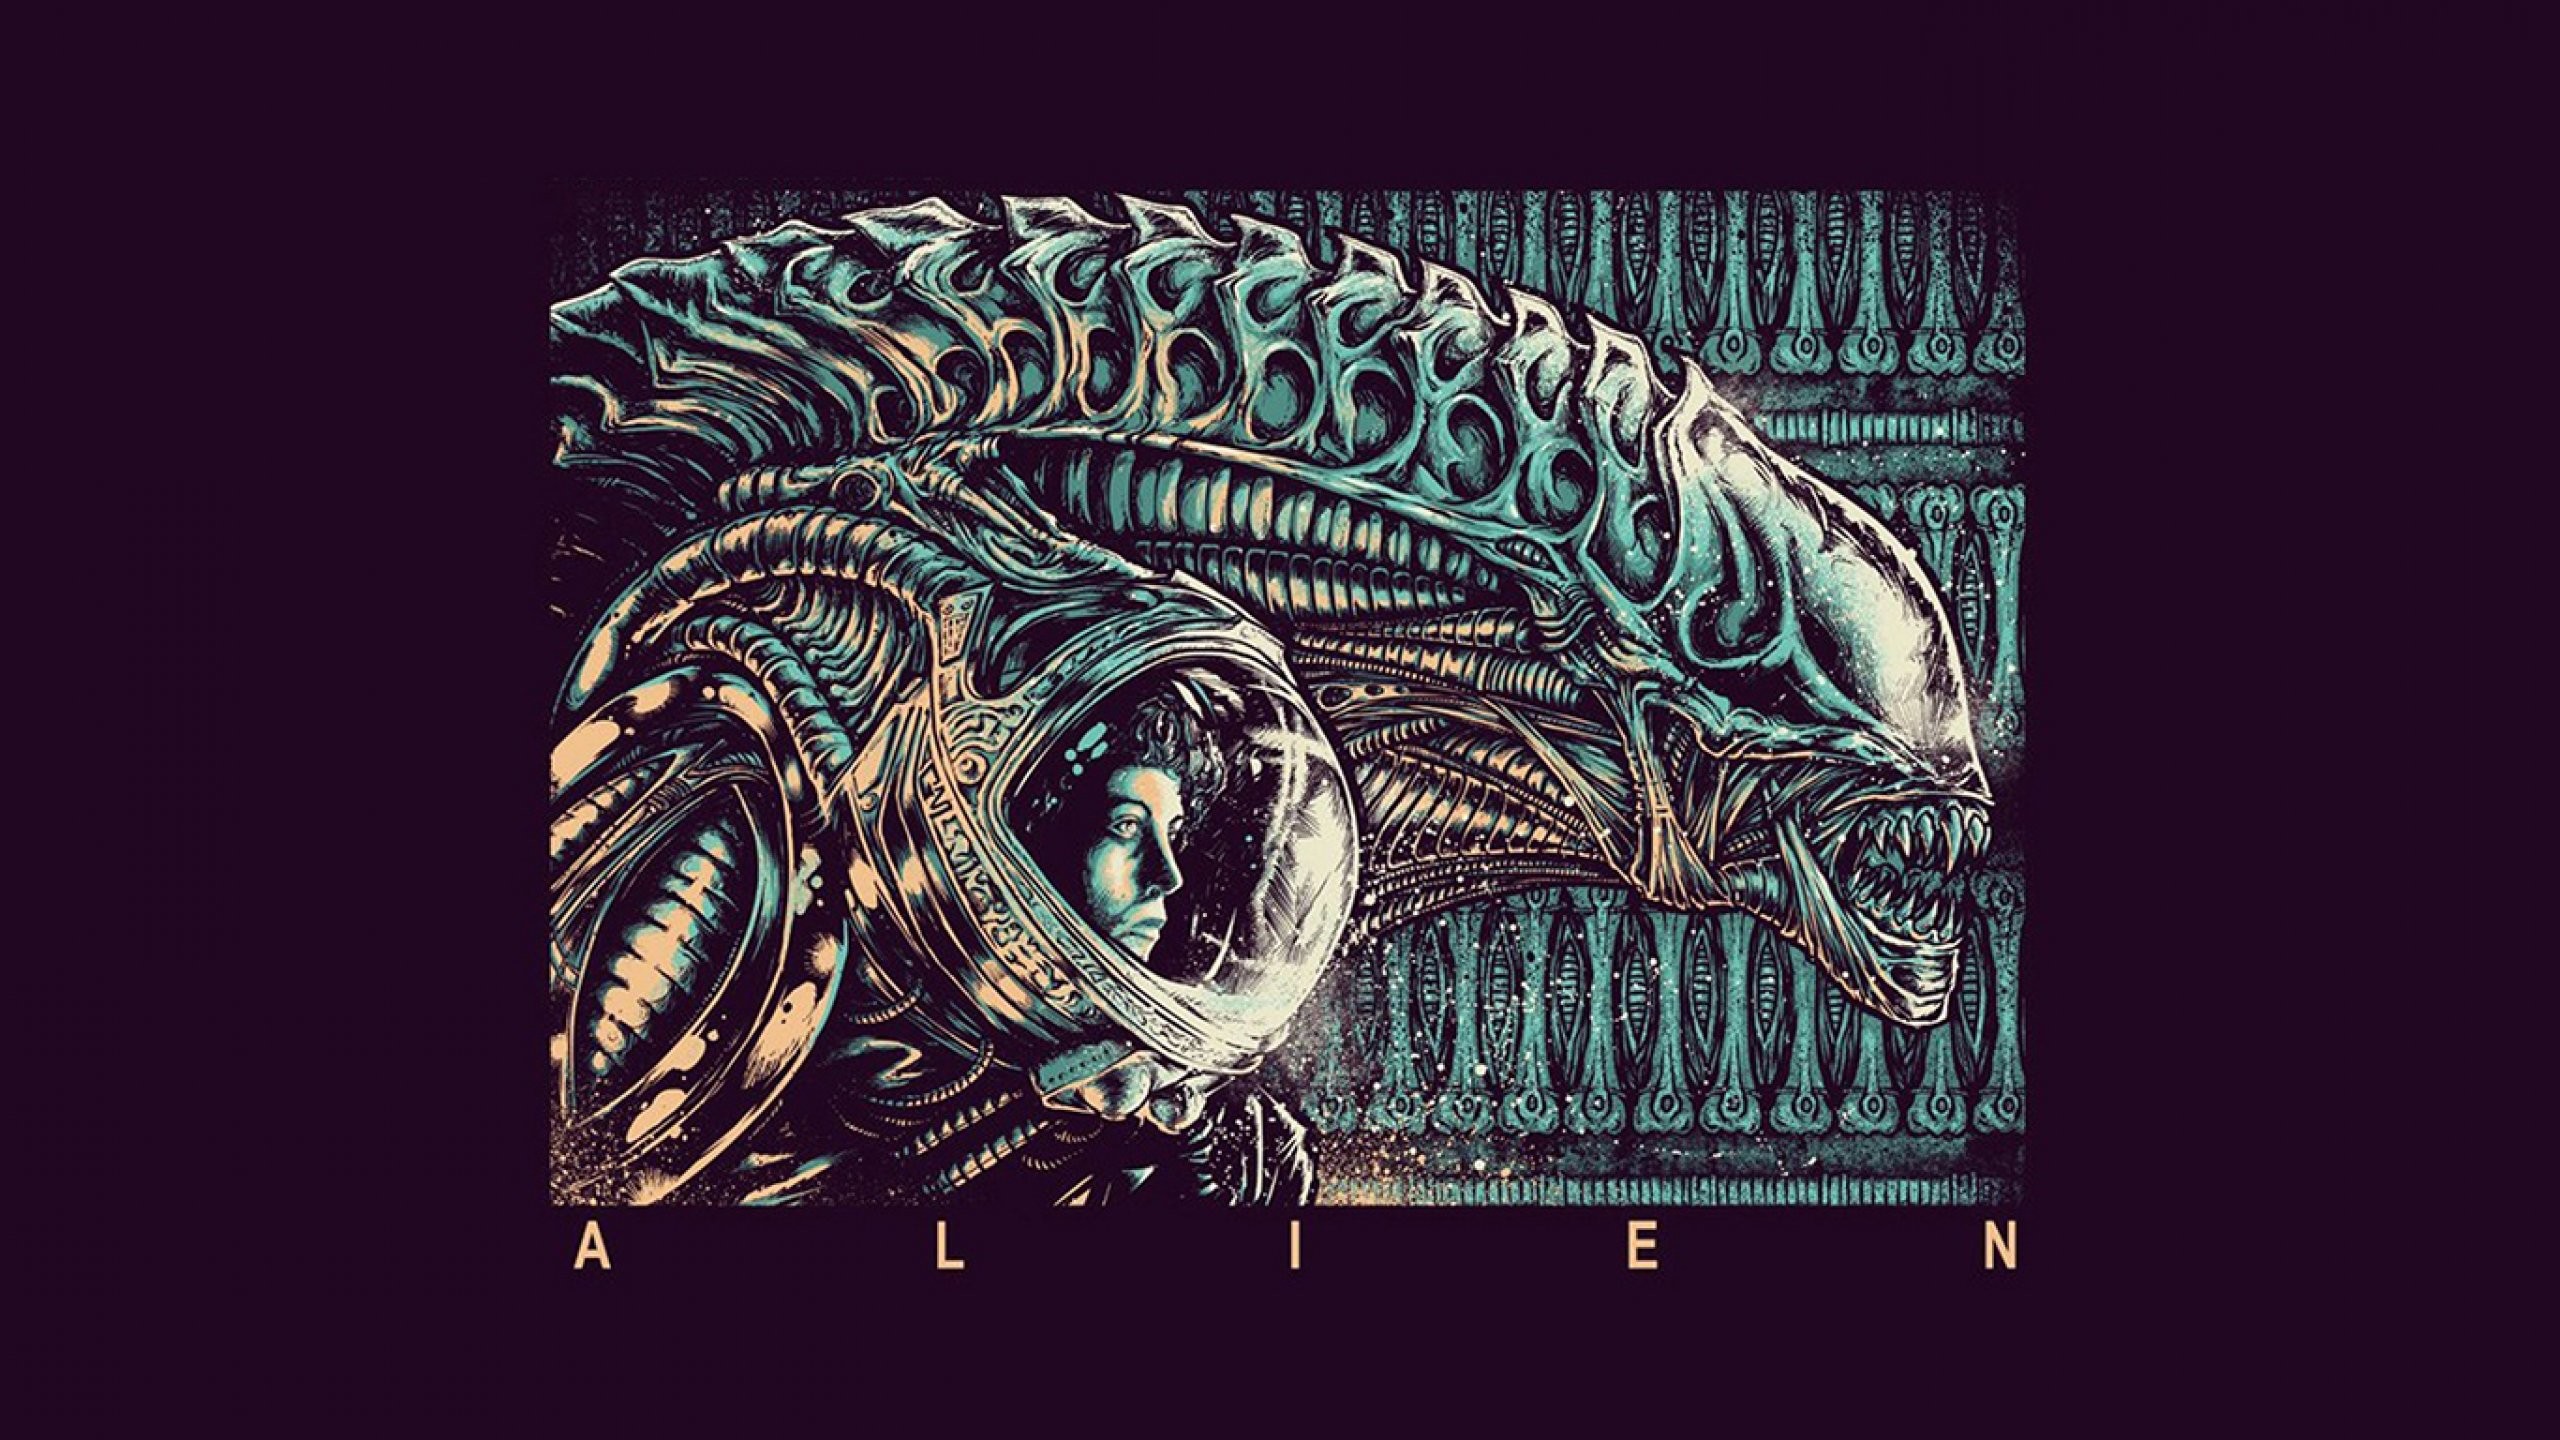 H R GIGER art artwork dark evil artistic horror fantasy sci fi alien aliens xenomorph wallpaper 695665 WallpaperUP